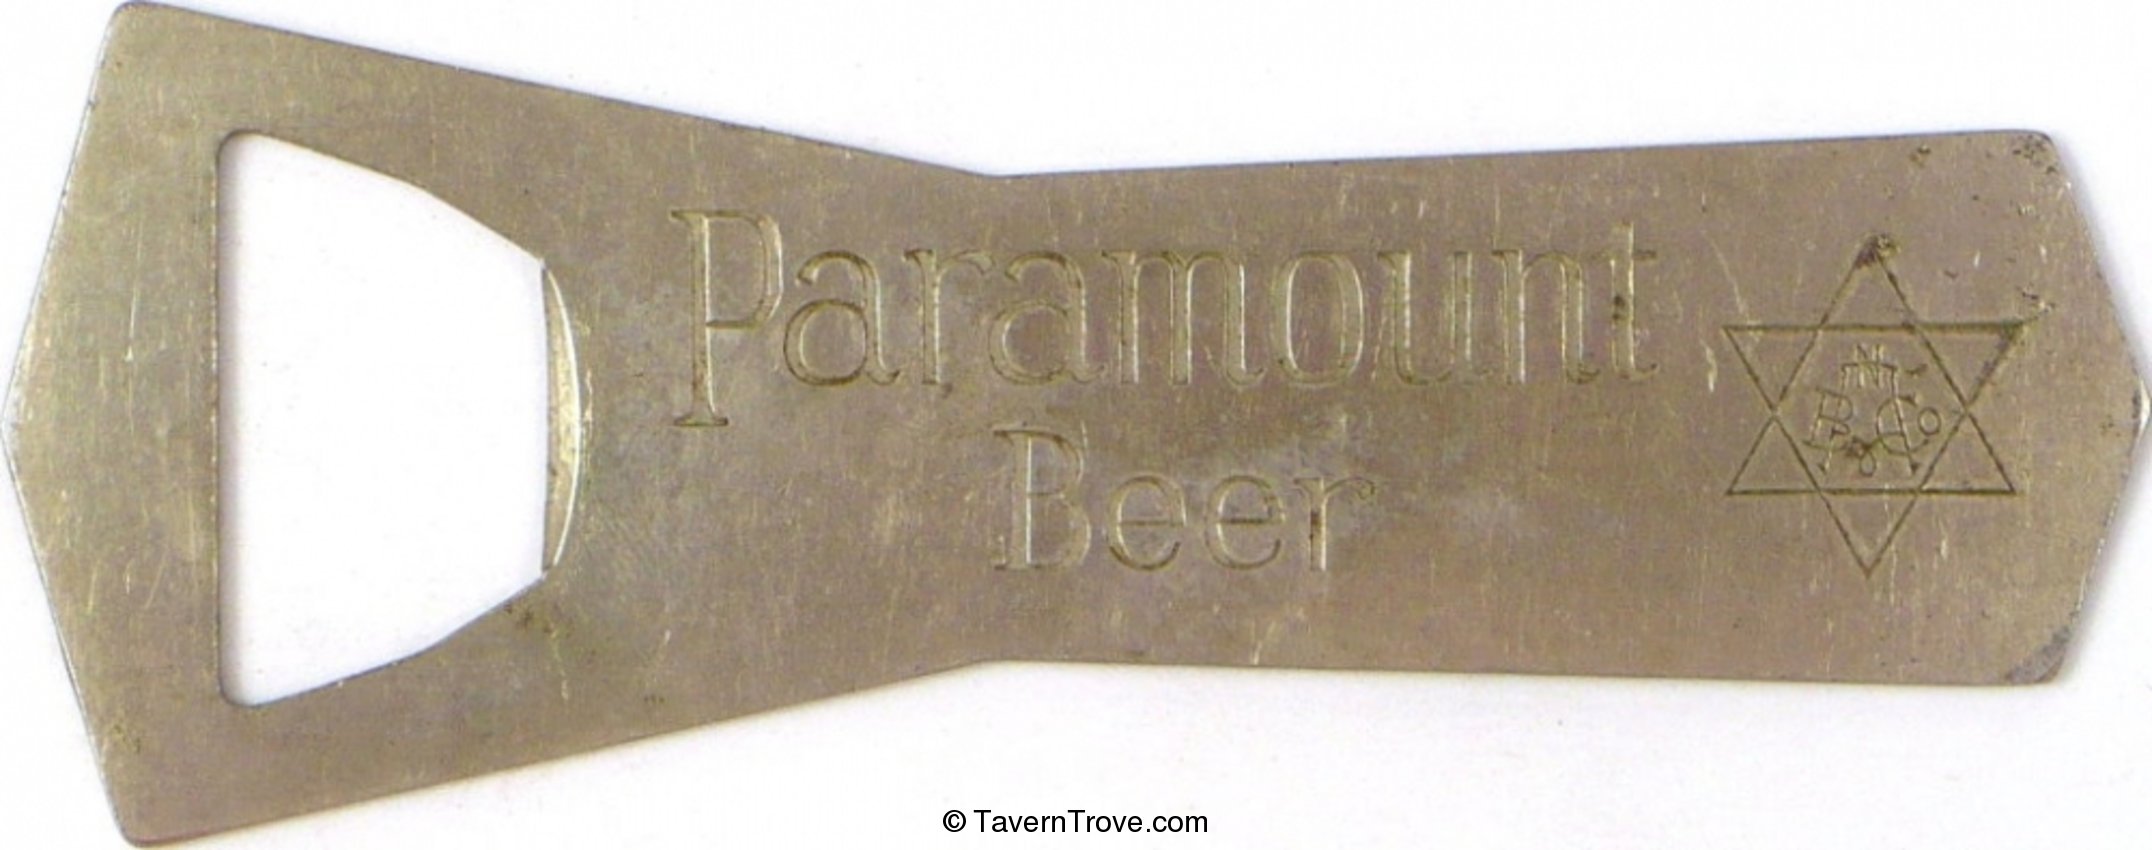 Paramount Beer